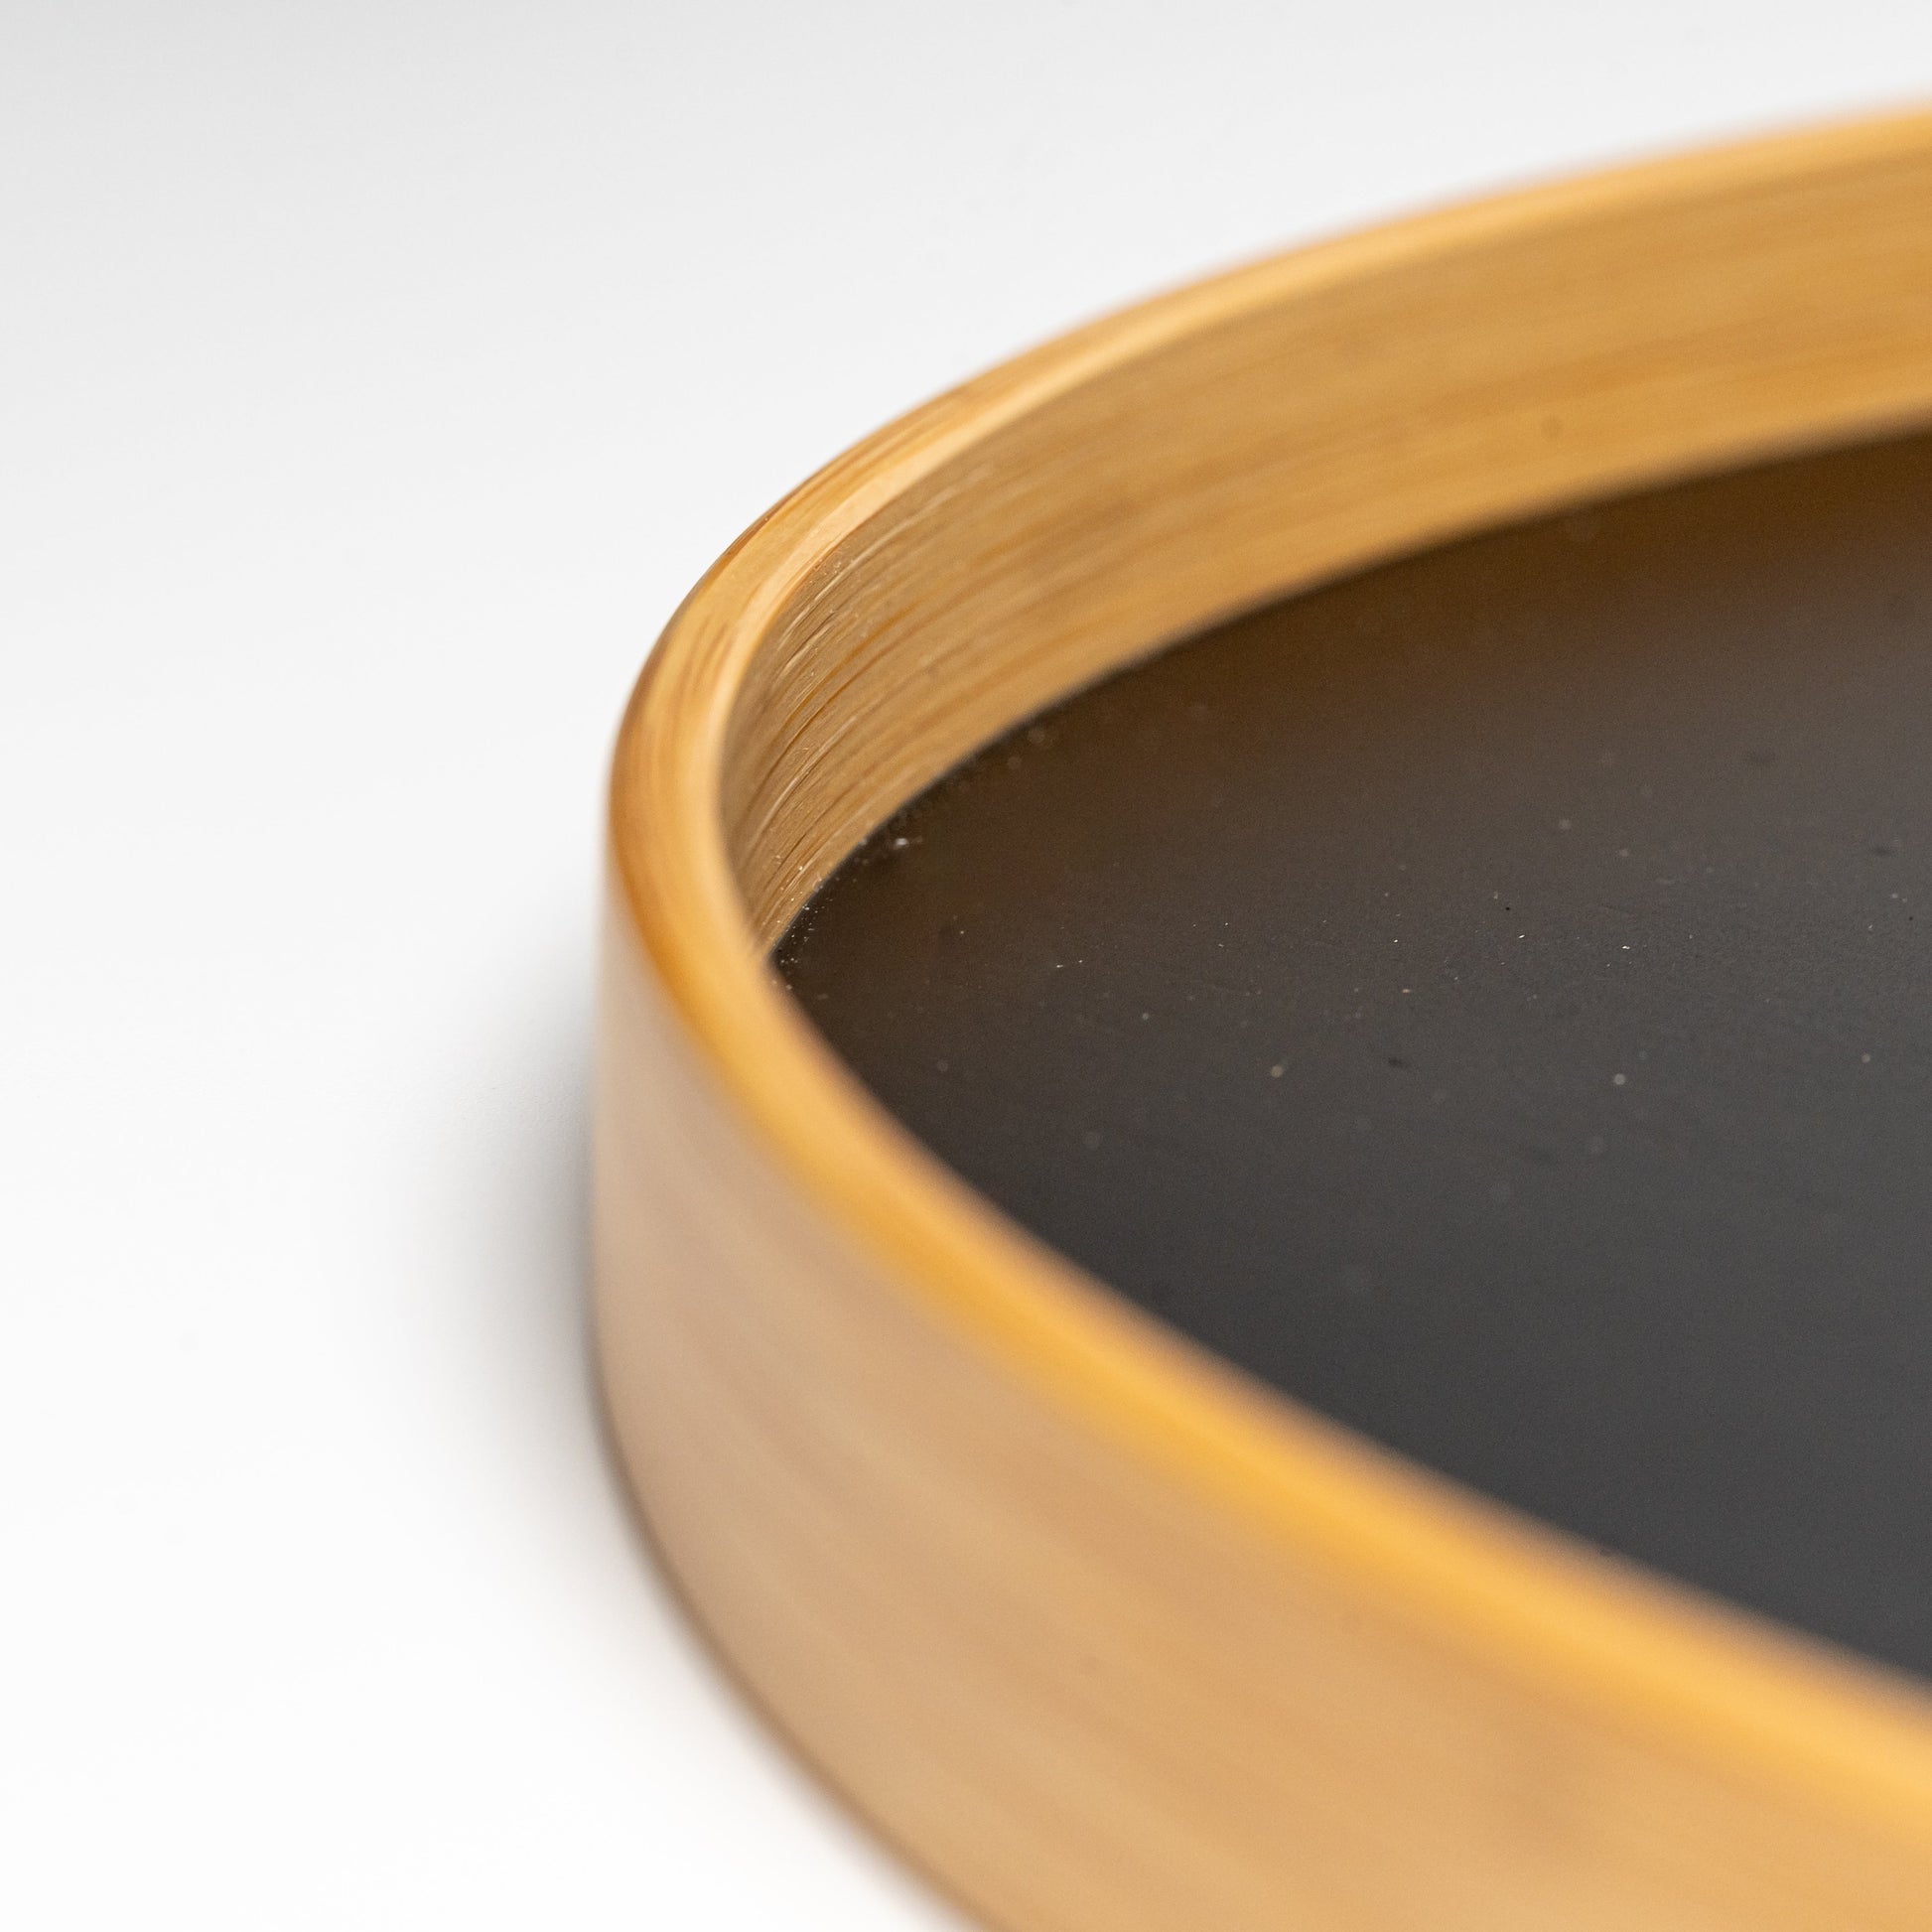 A close up of a Copenhagen series bamboo tray